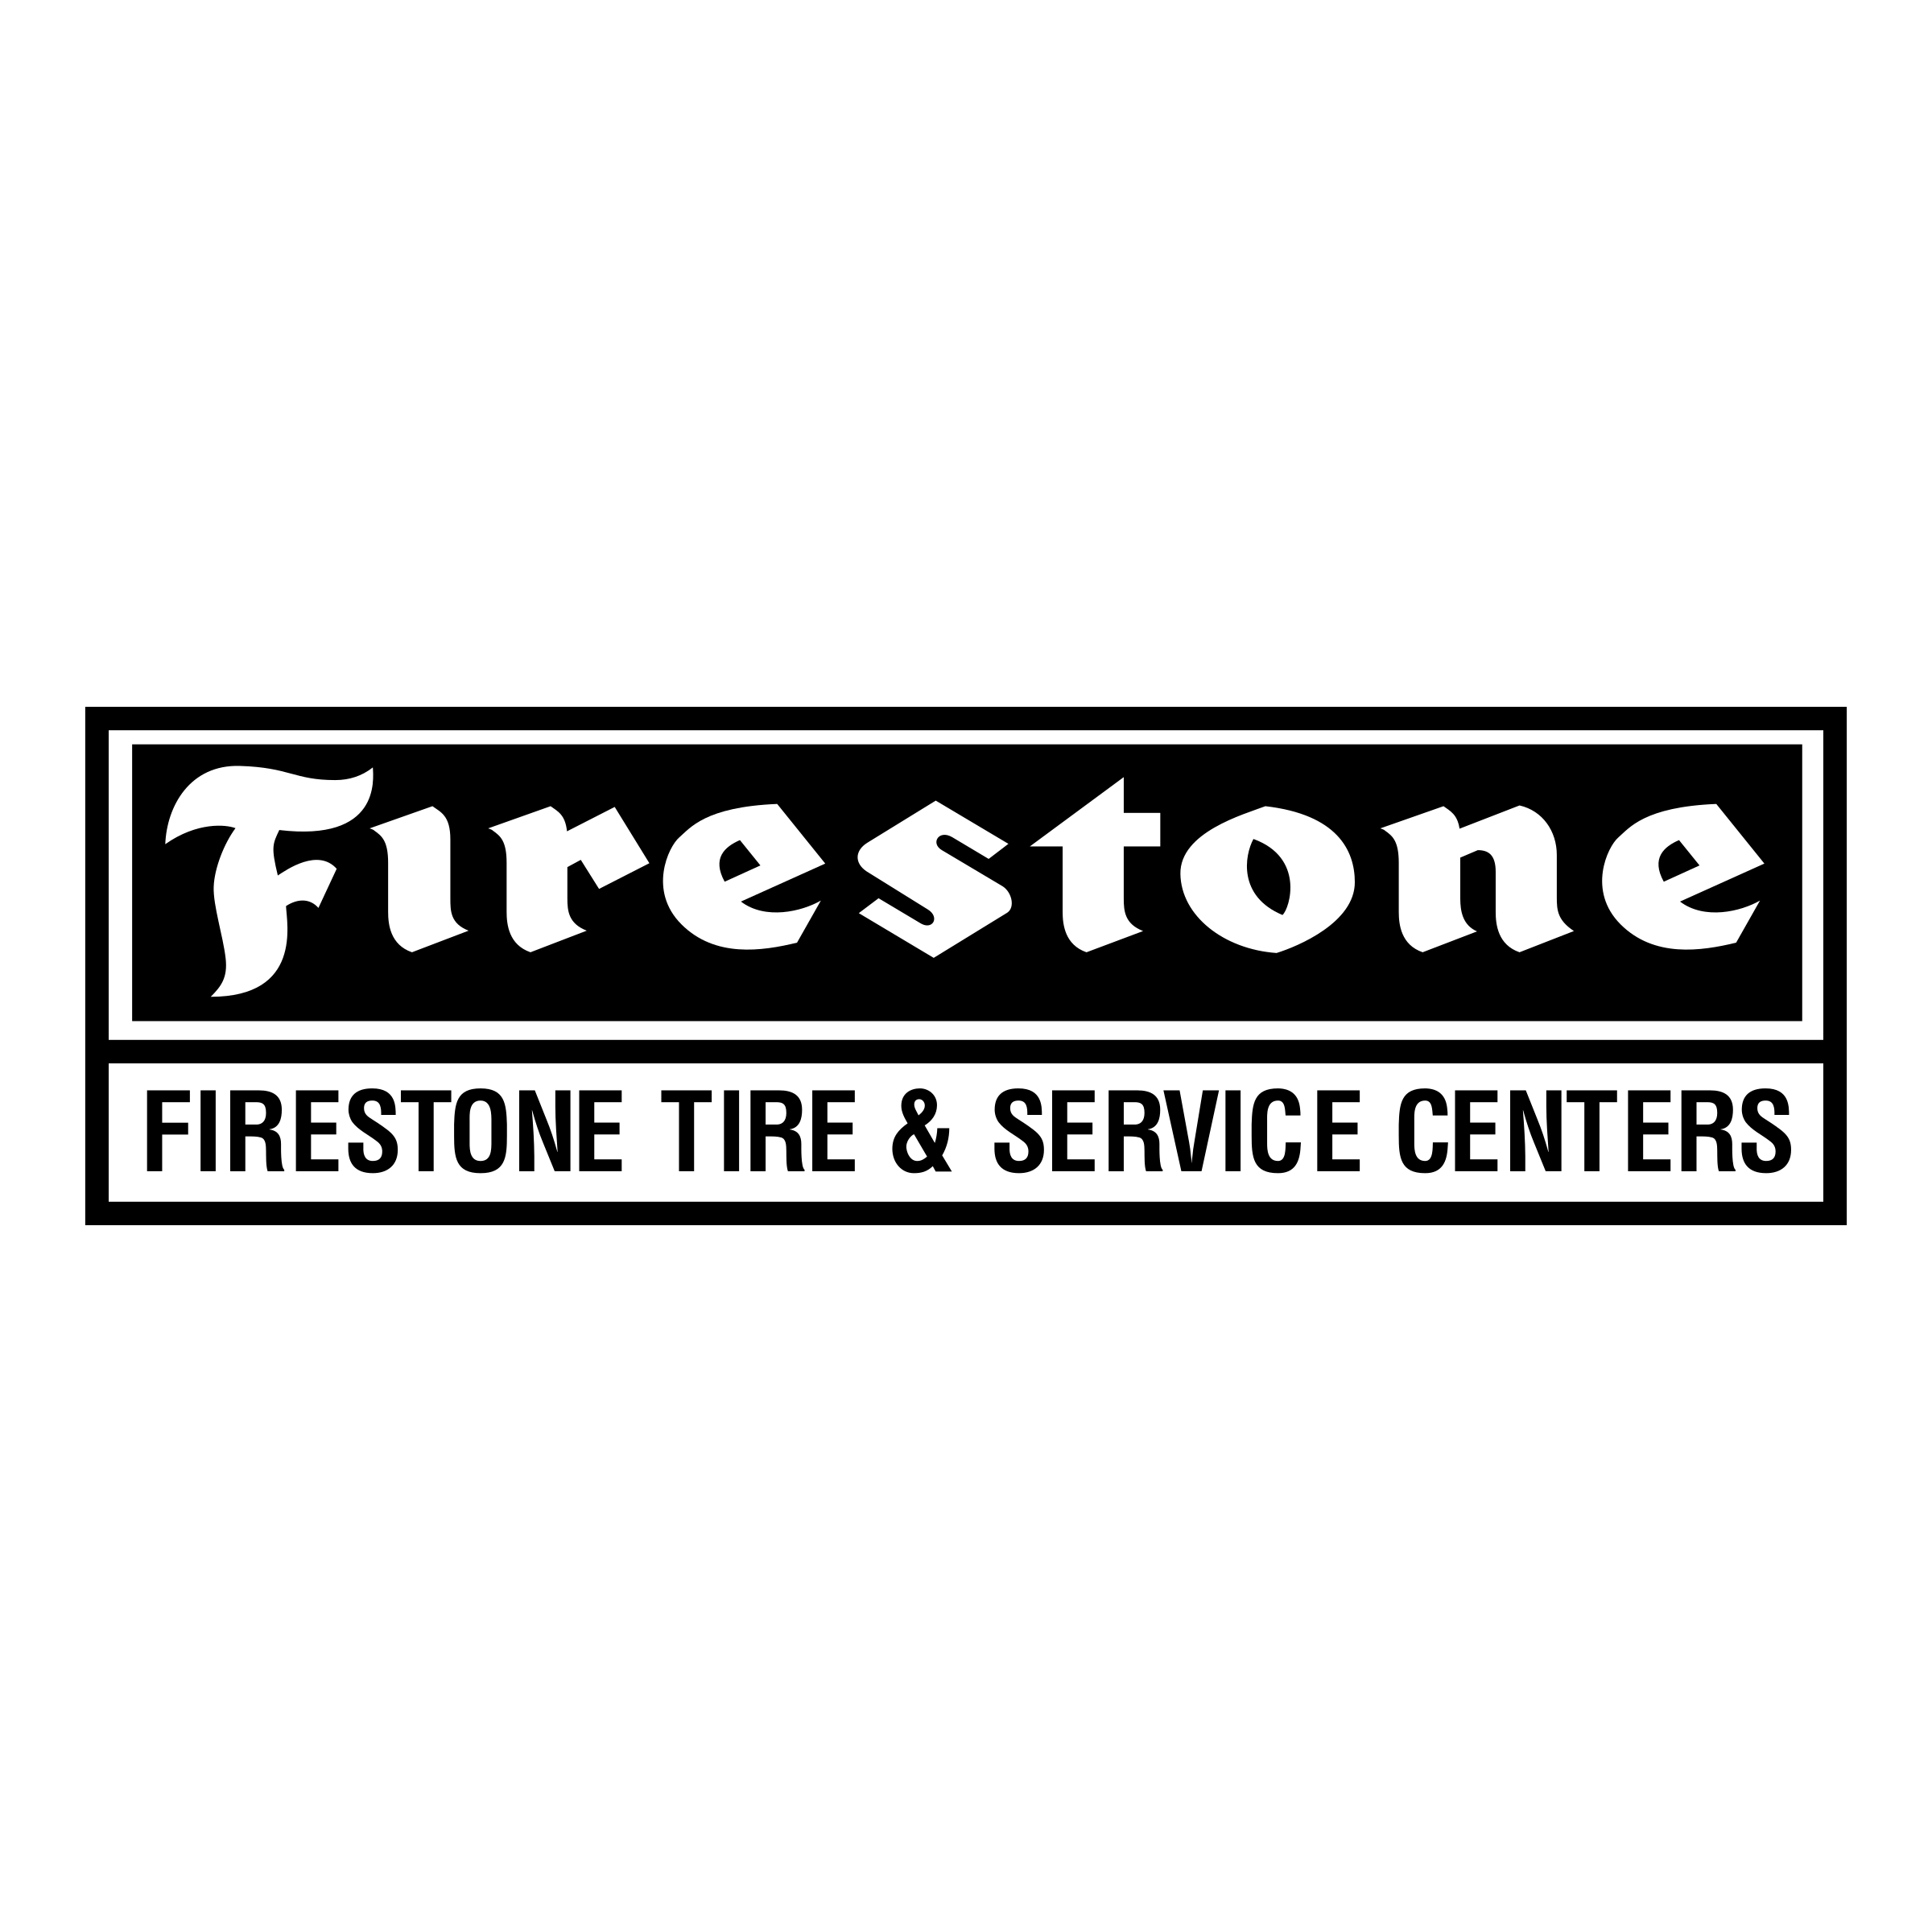 Firestone Logo - Firestone Logo PNG Transparent & SVG Vector - Freebie Supply